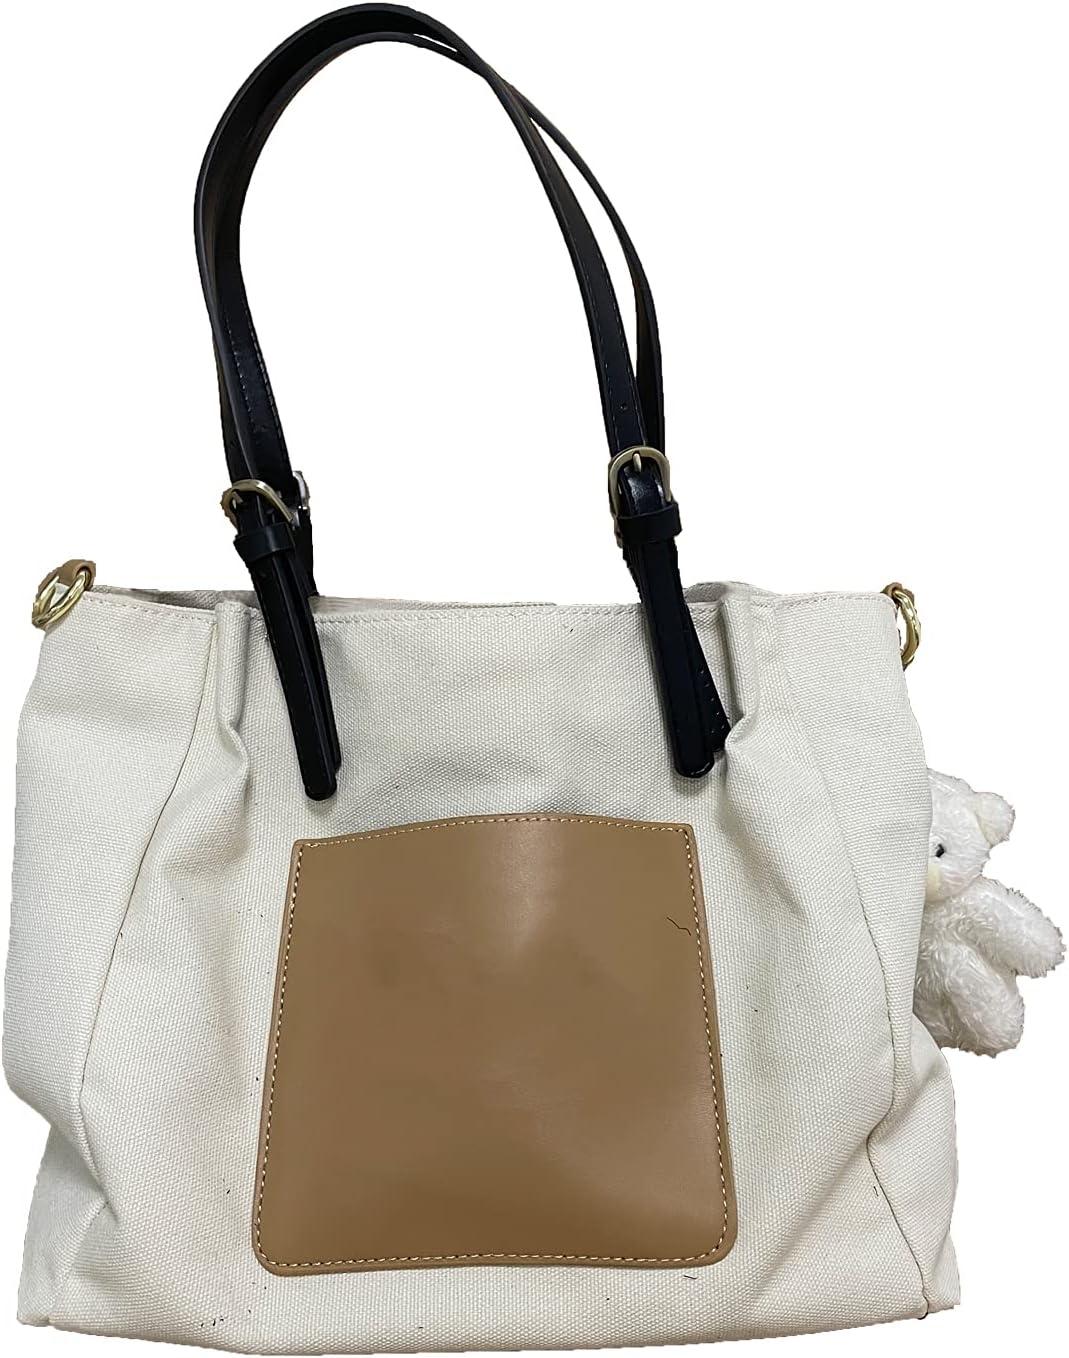 Semetall 2pcs PU Leather Purse Straps, Adjustable Purse Handles Bag Straps  Replacement for Shoulder Handbag,Brown